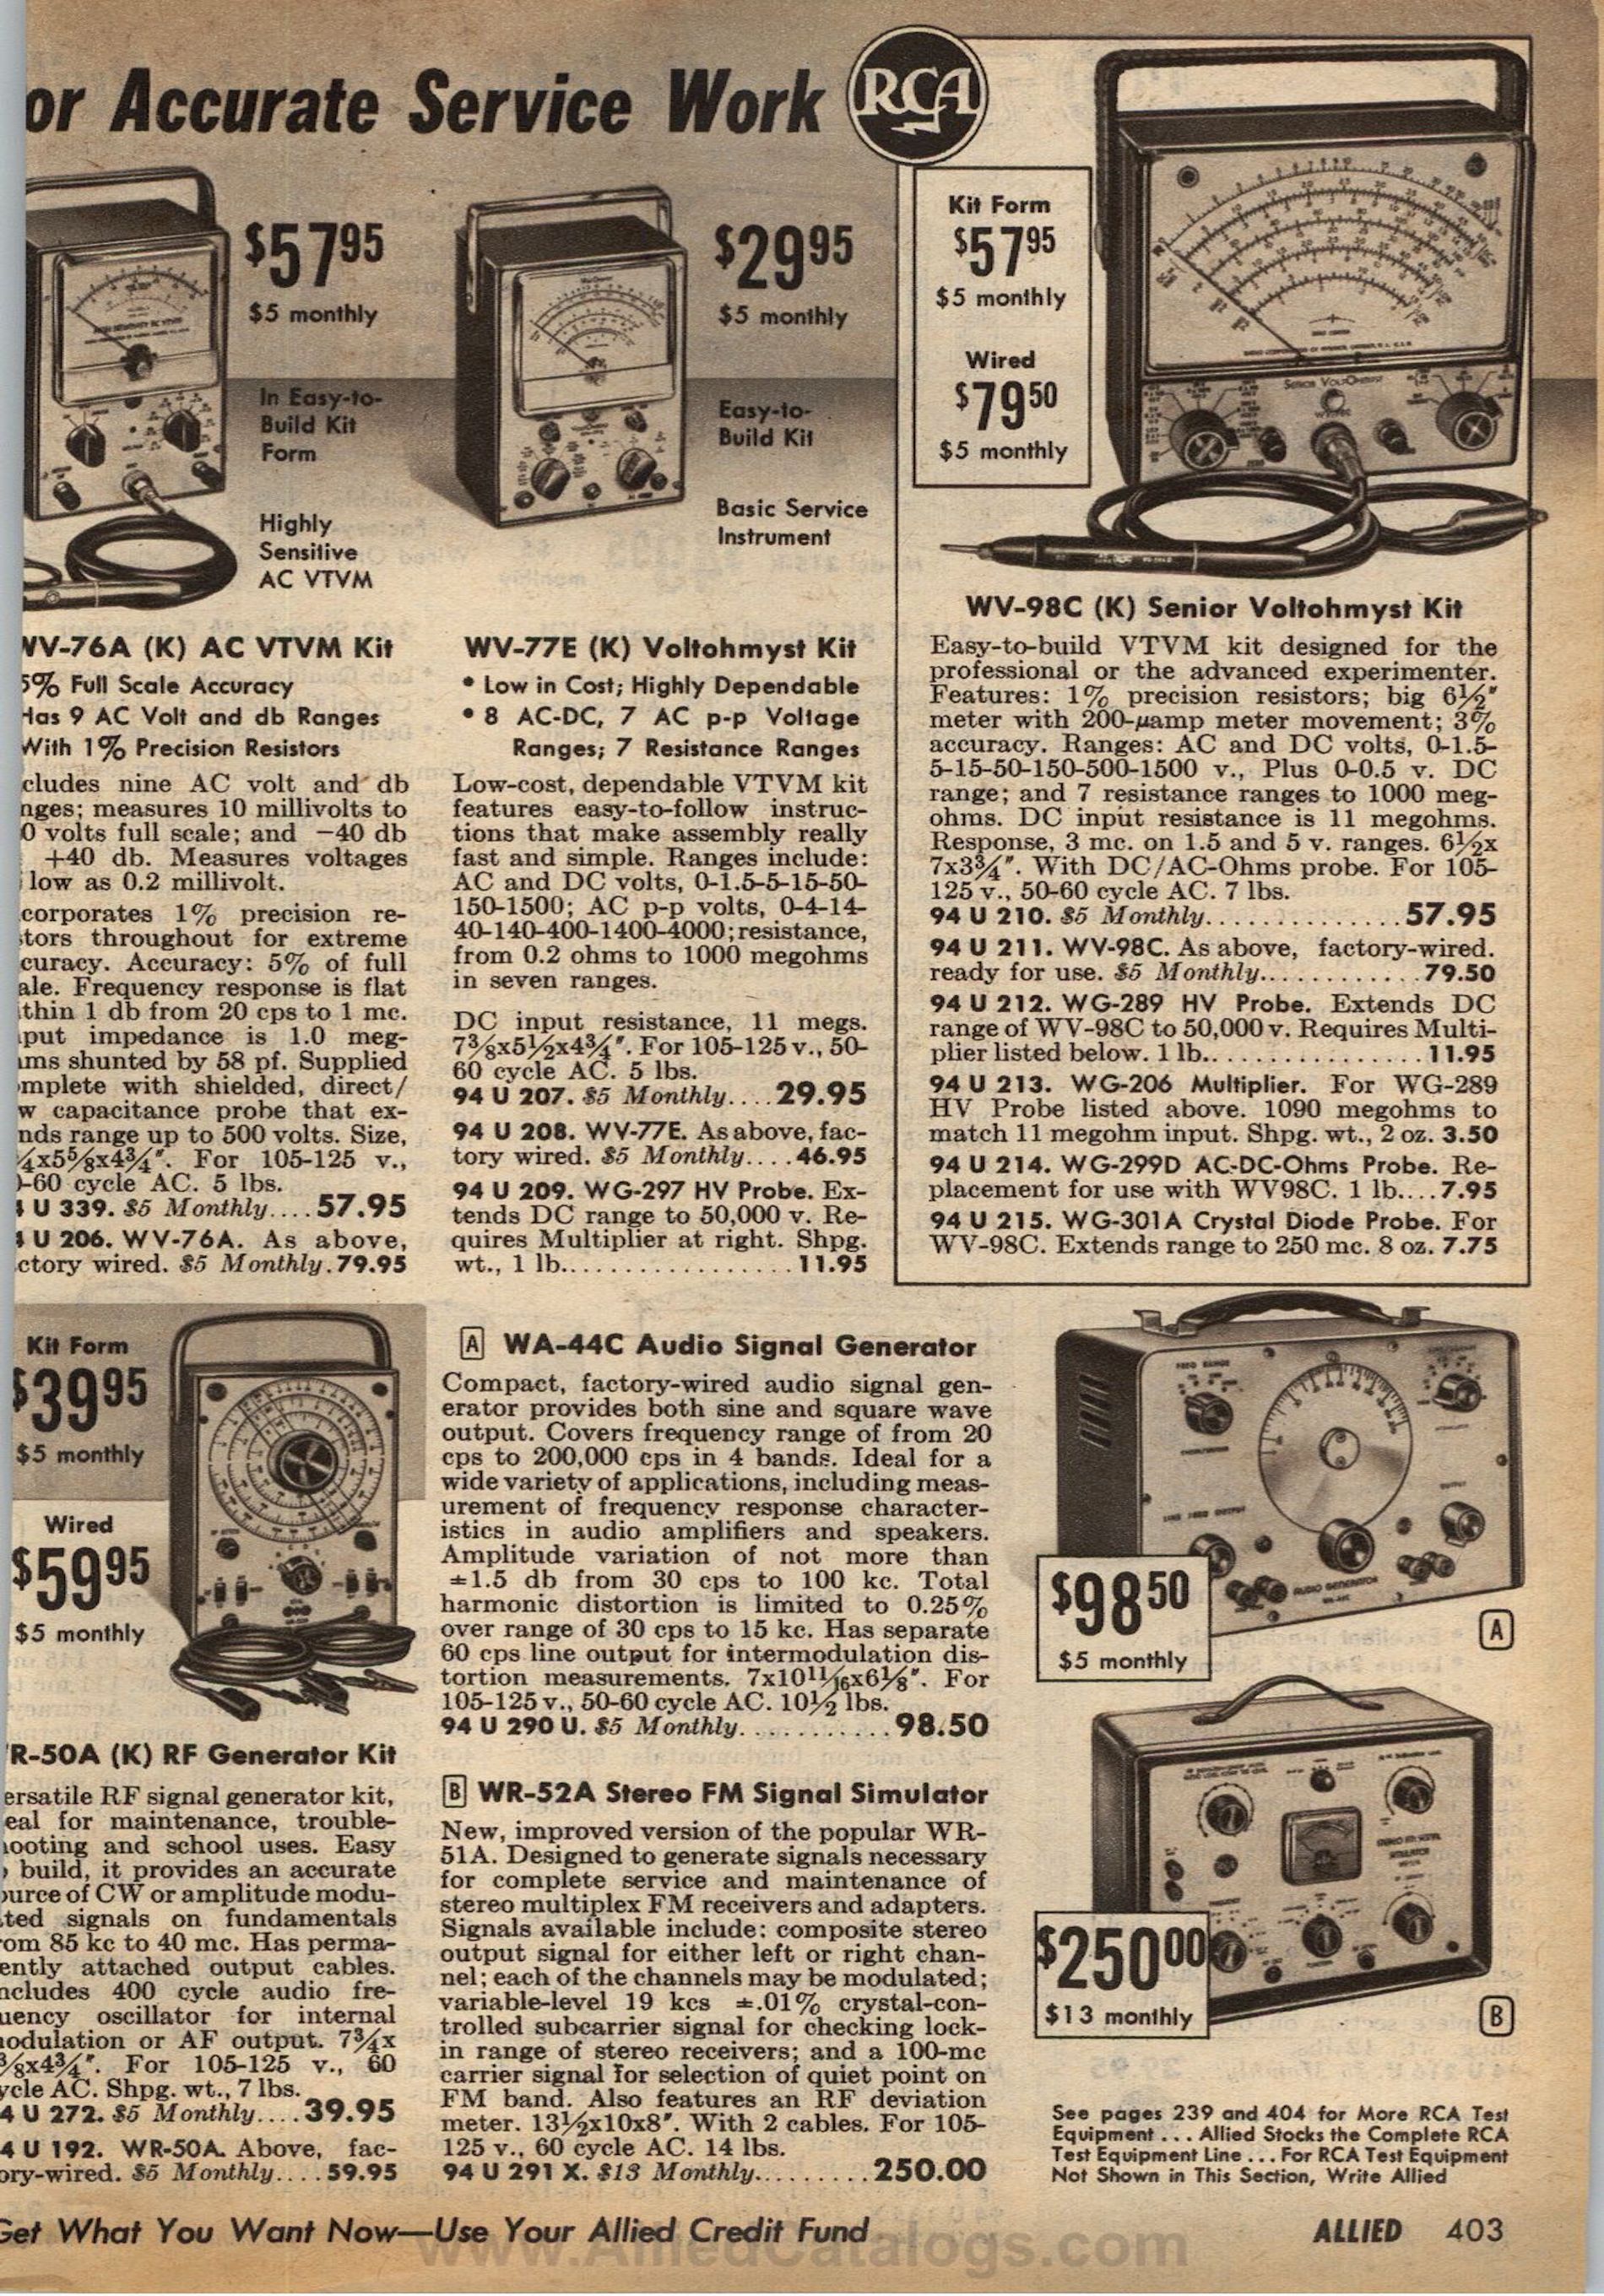 1966 Allied Radio Catalog pg 403 RCA test equipment